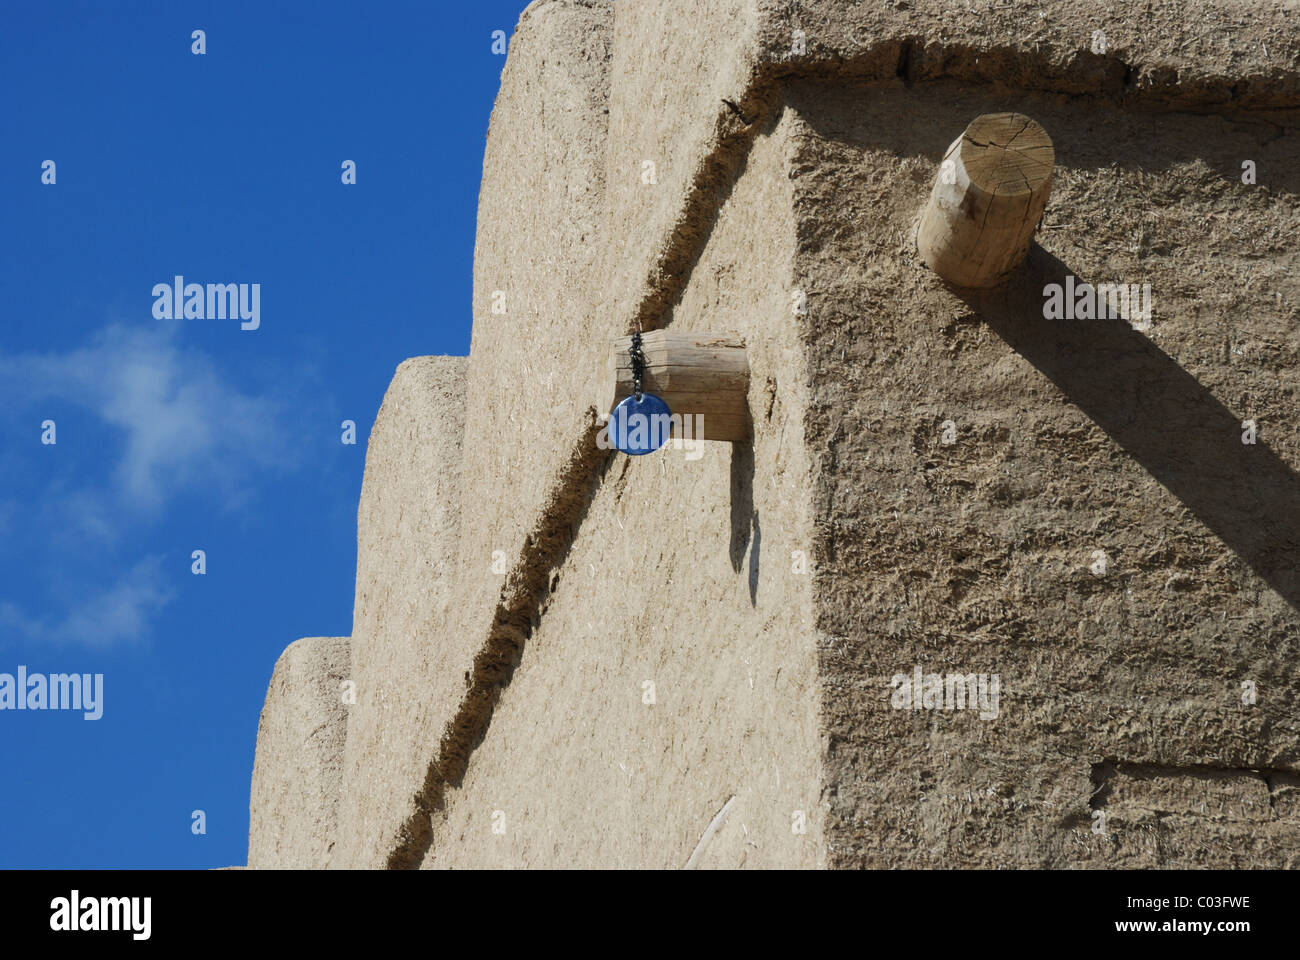 Nazar boncuk (evil eye charm) on the reconstruction of the Hittite Walls, Bogazköy, Turkey 101003 Stock Photo